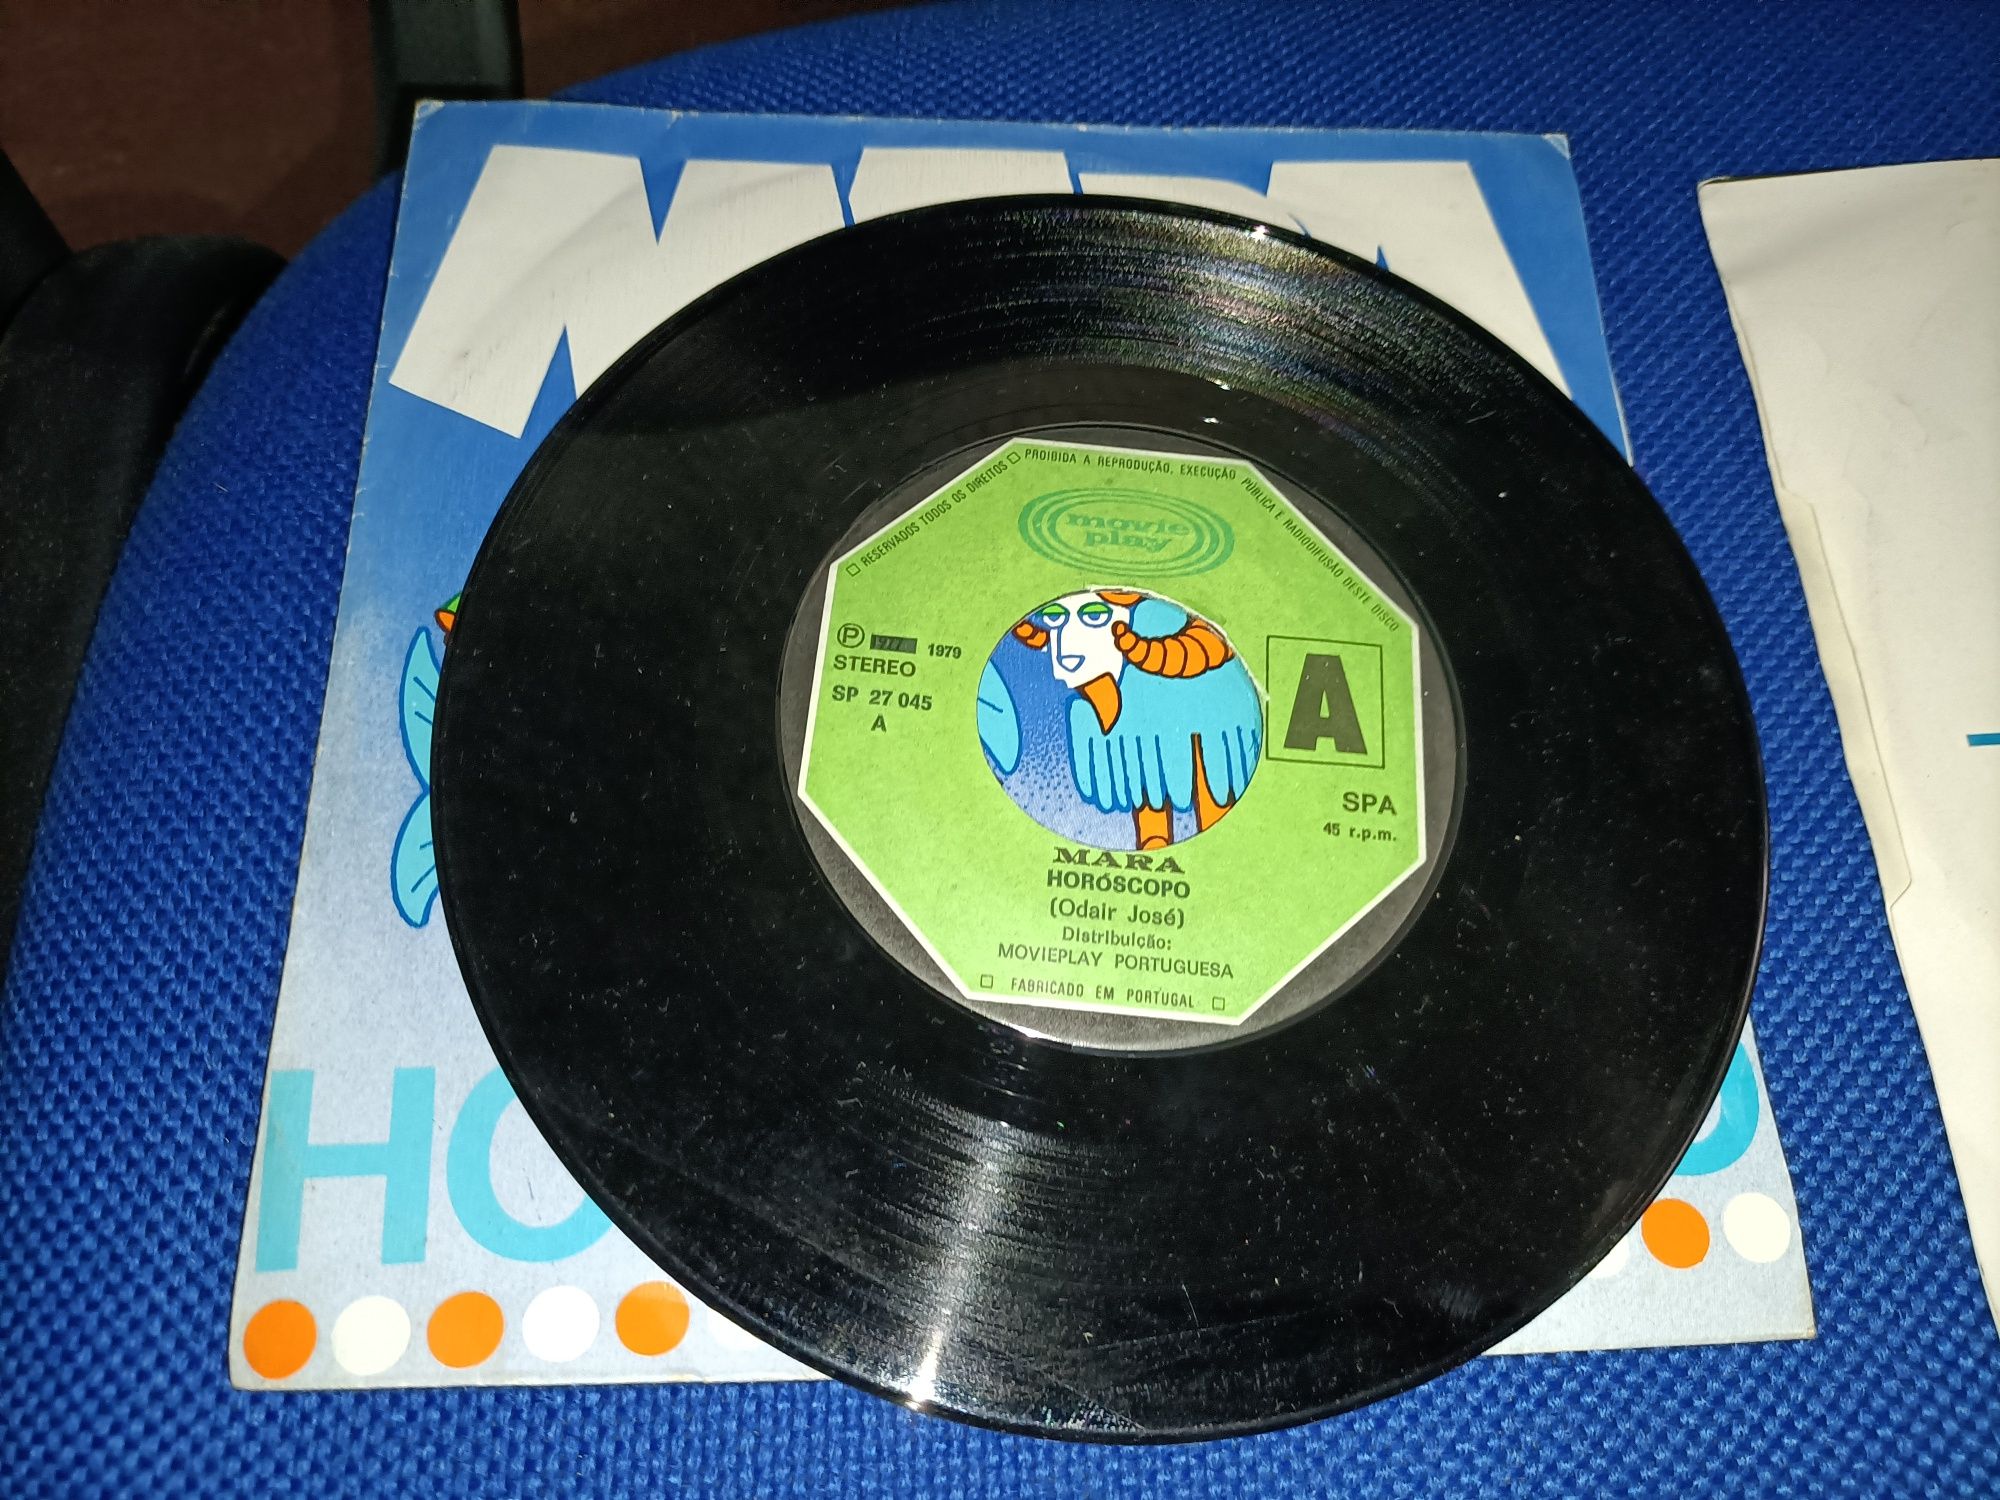 Mara_2 discos vinil 45 RPM